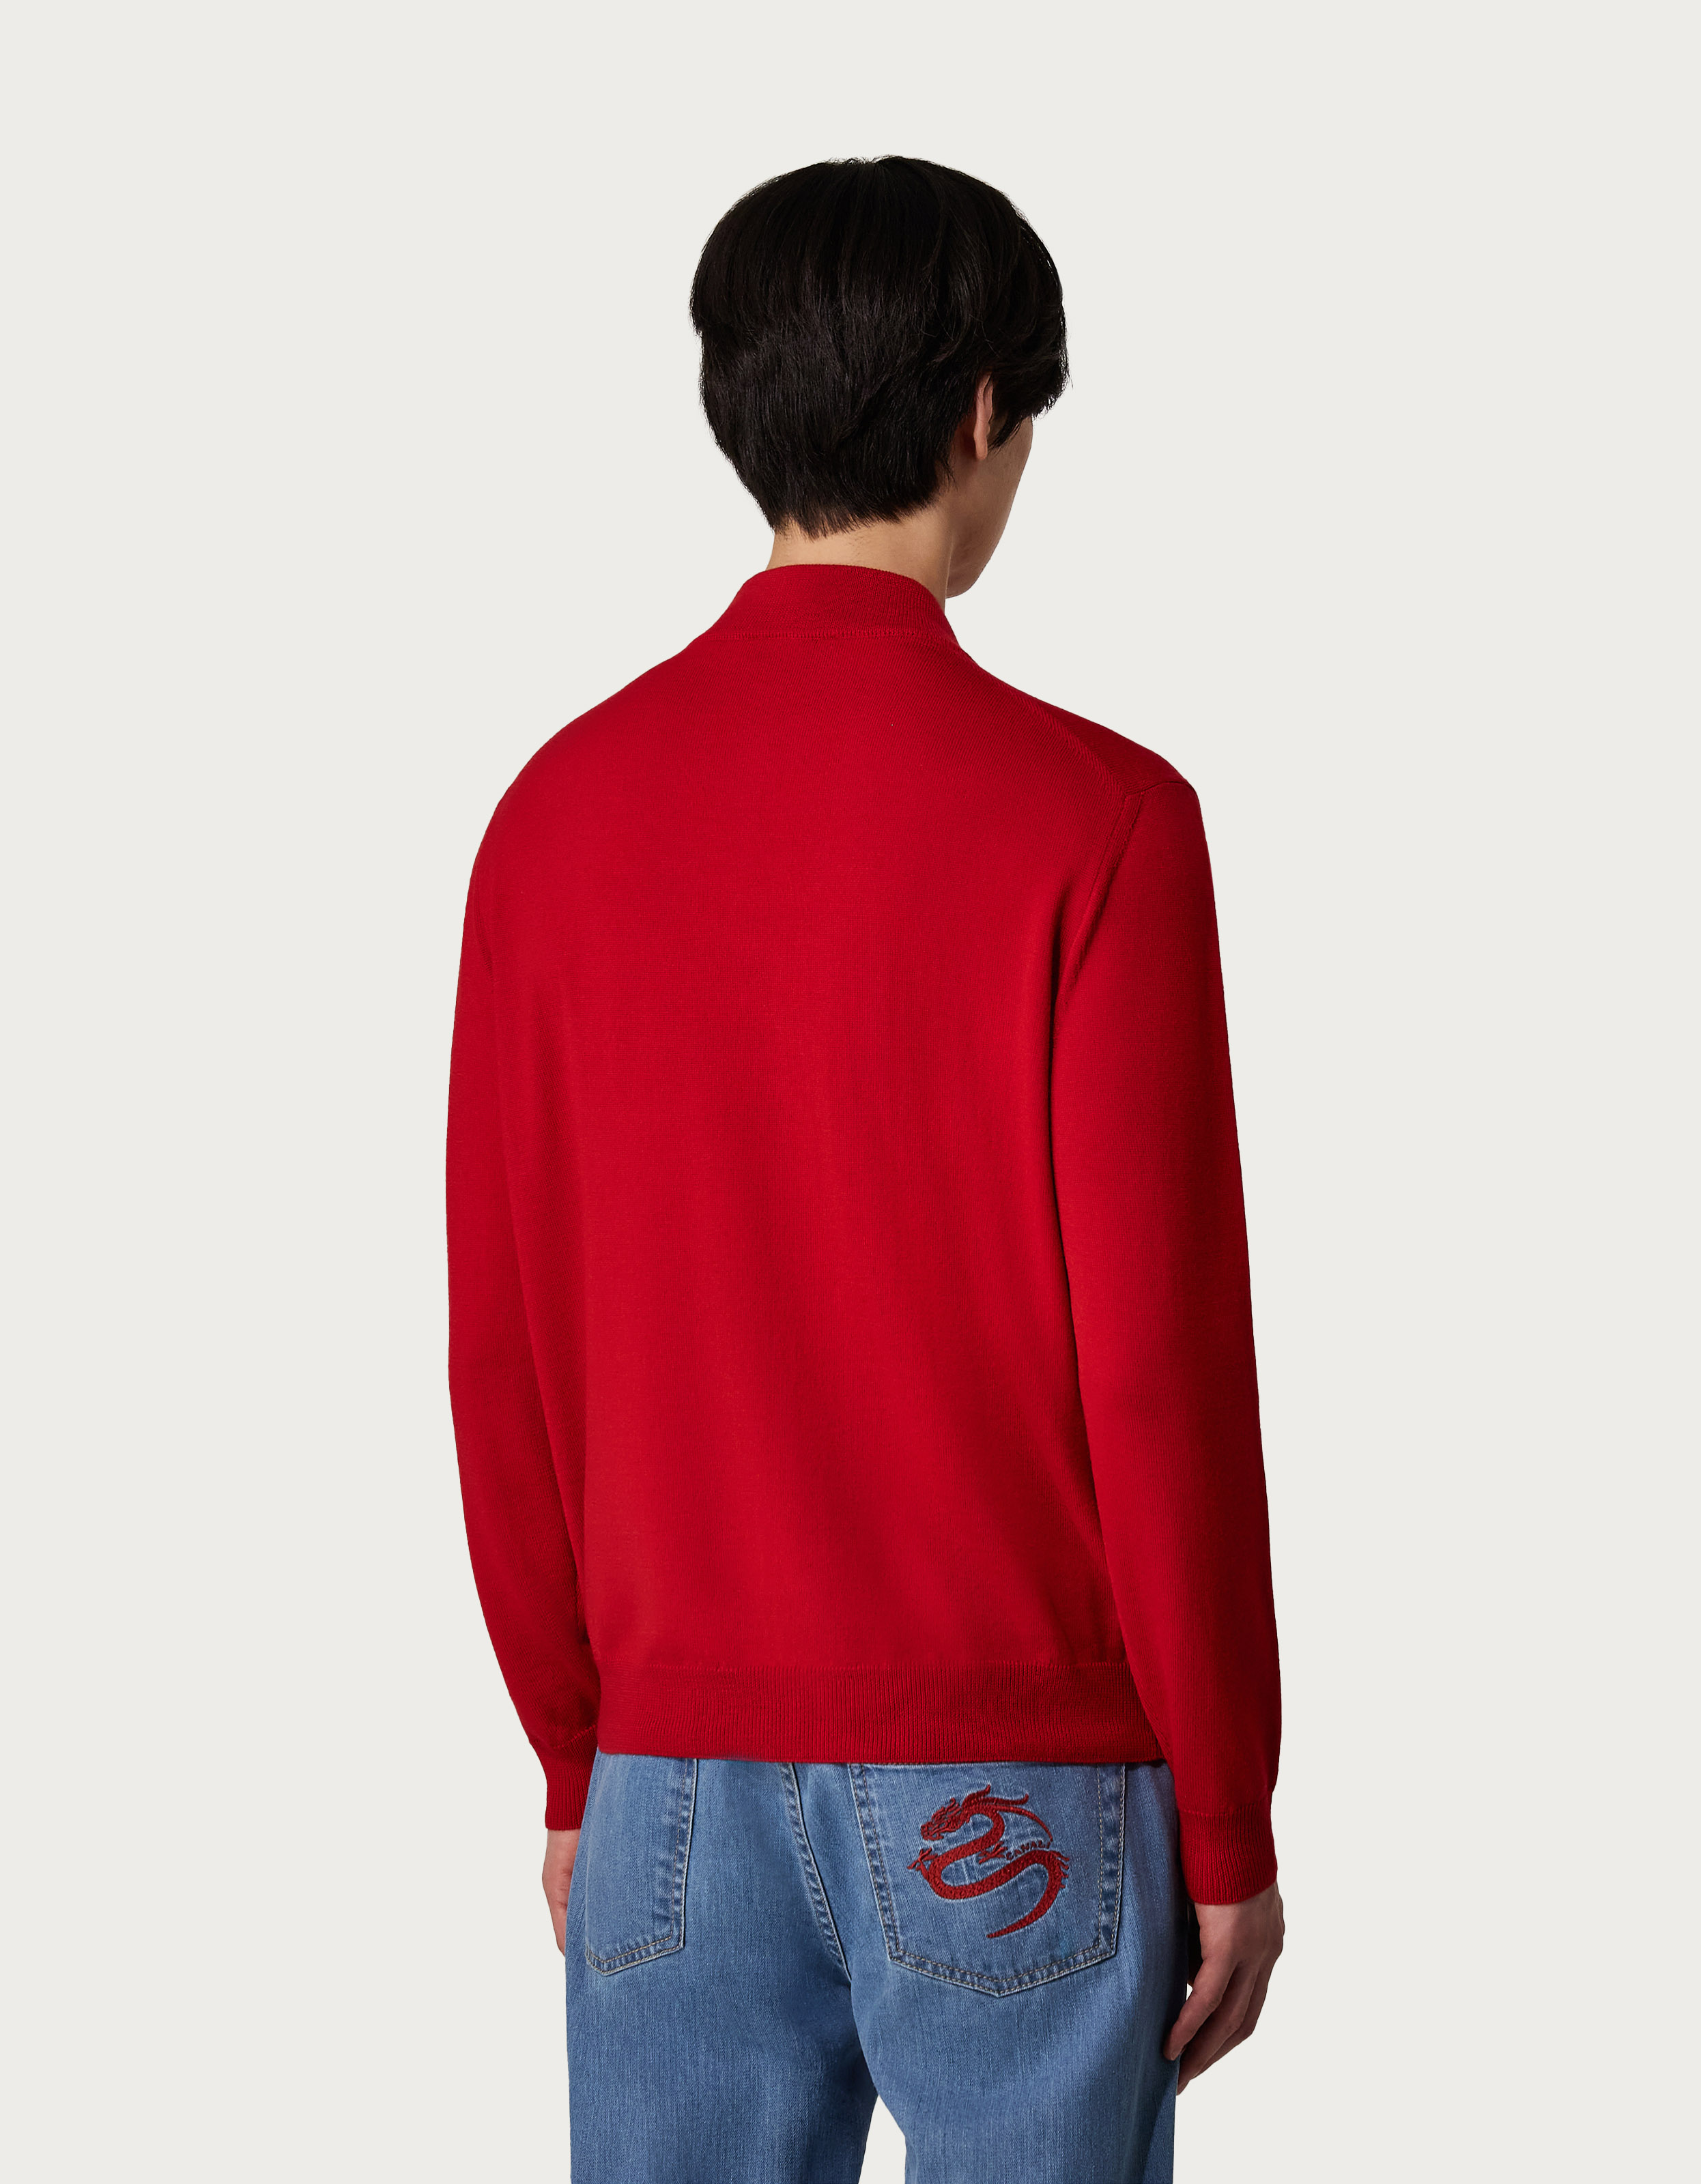 Merino wool turtleneck sweater in red - Canali INTL